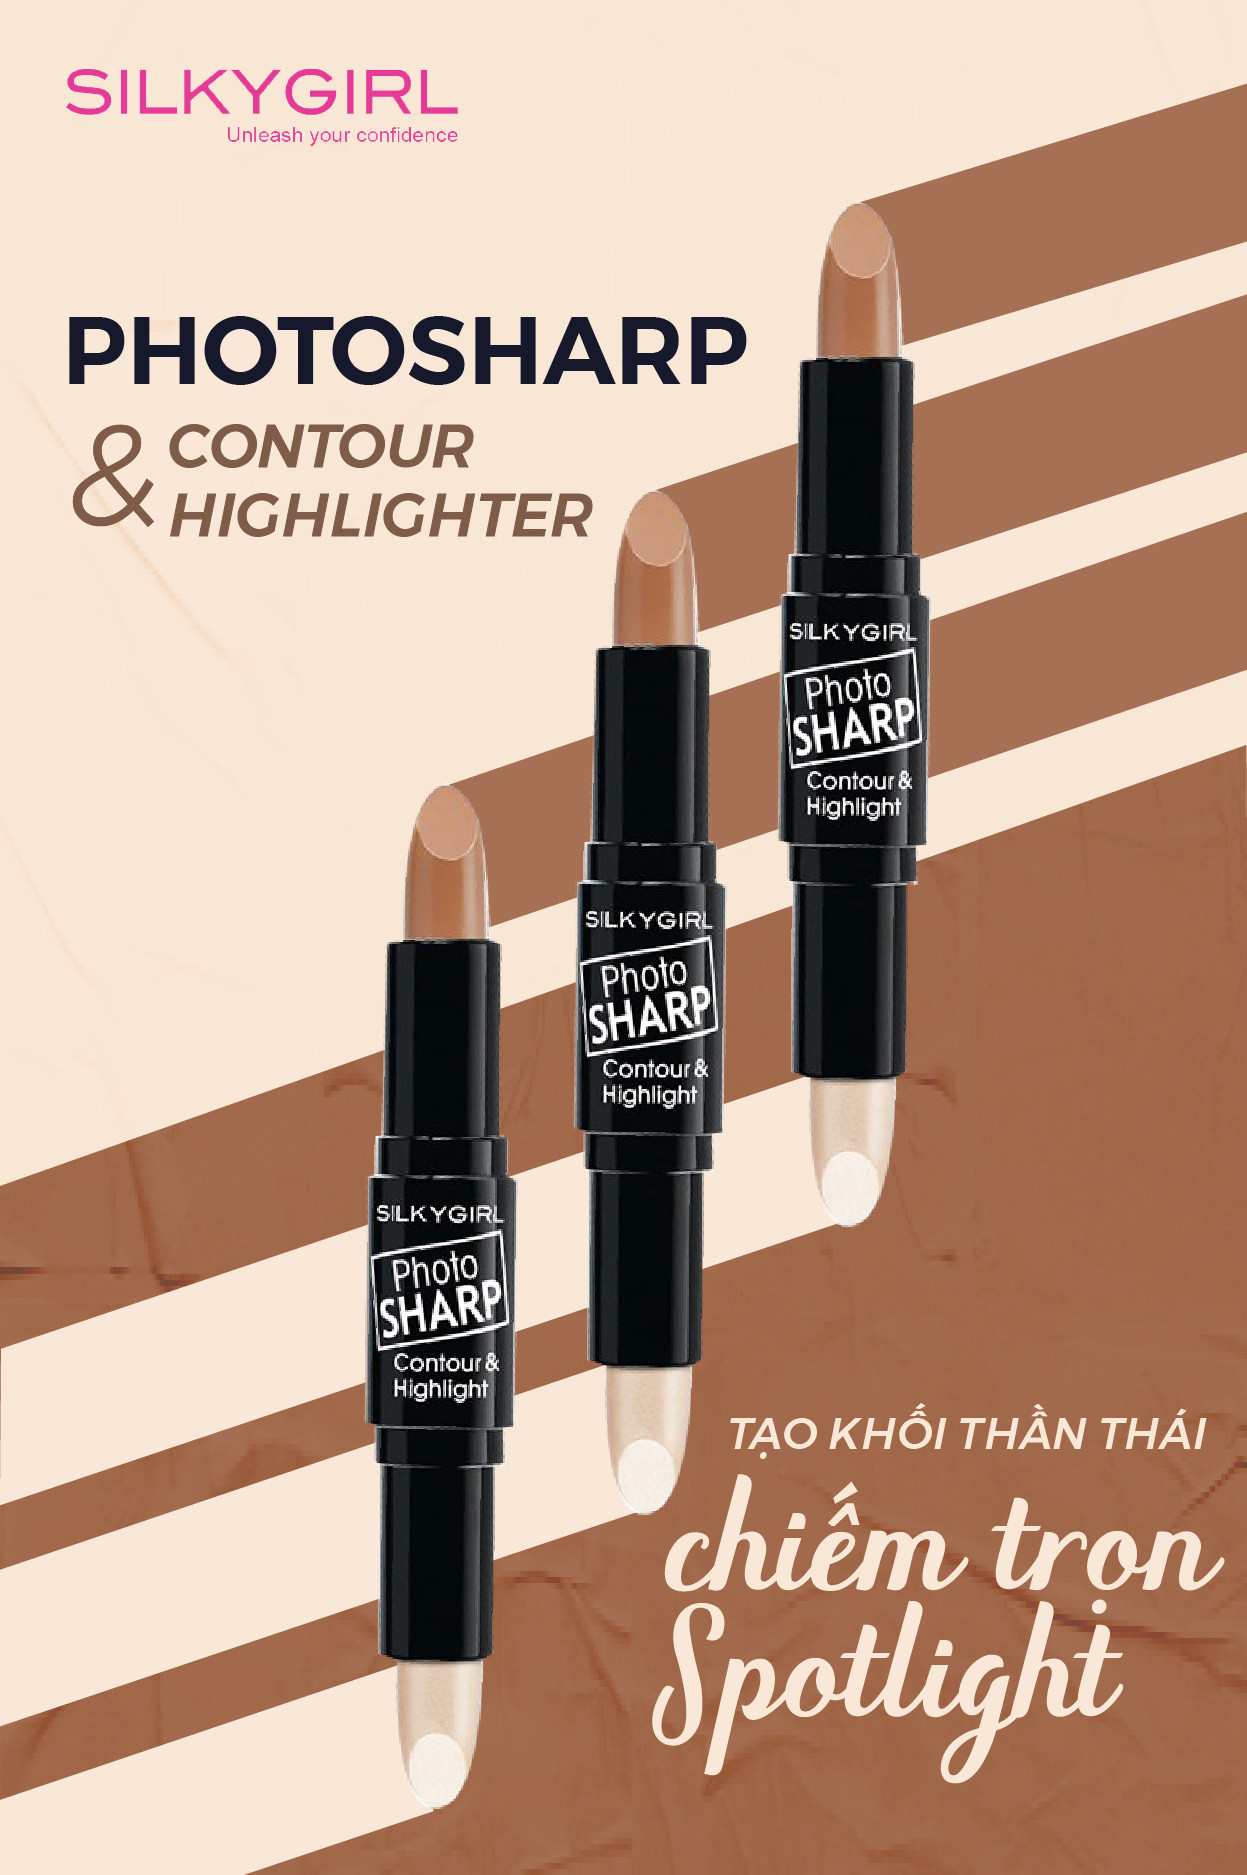 Silkygirl Photosharp Contour & Highlighter